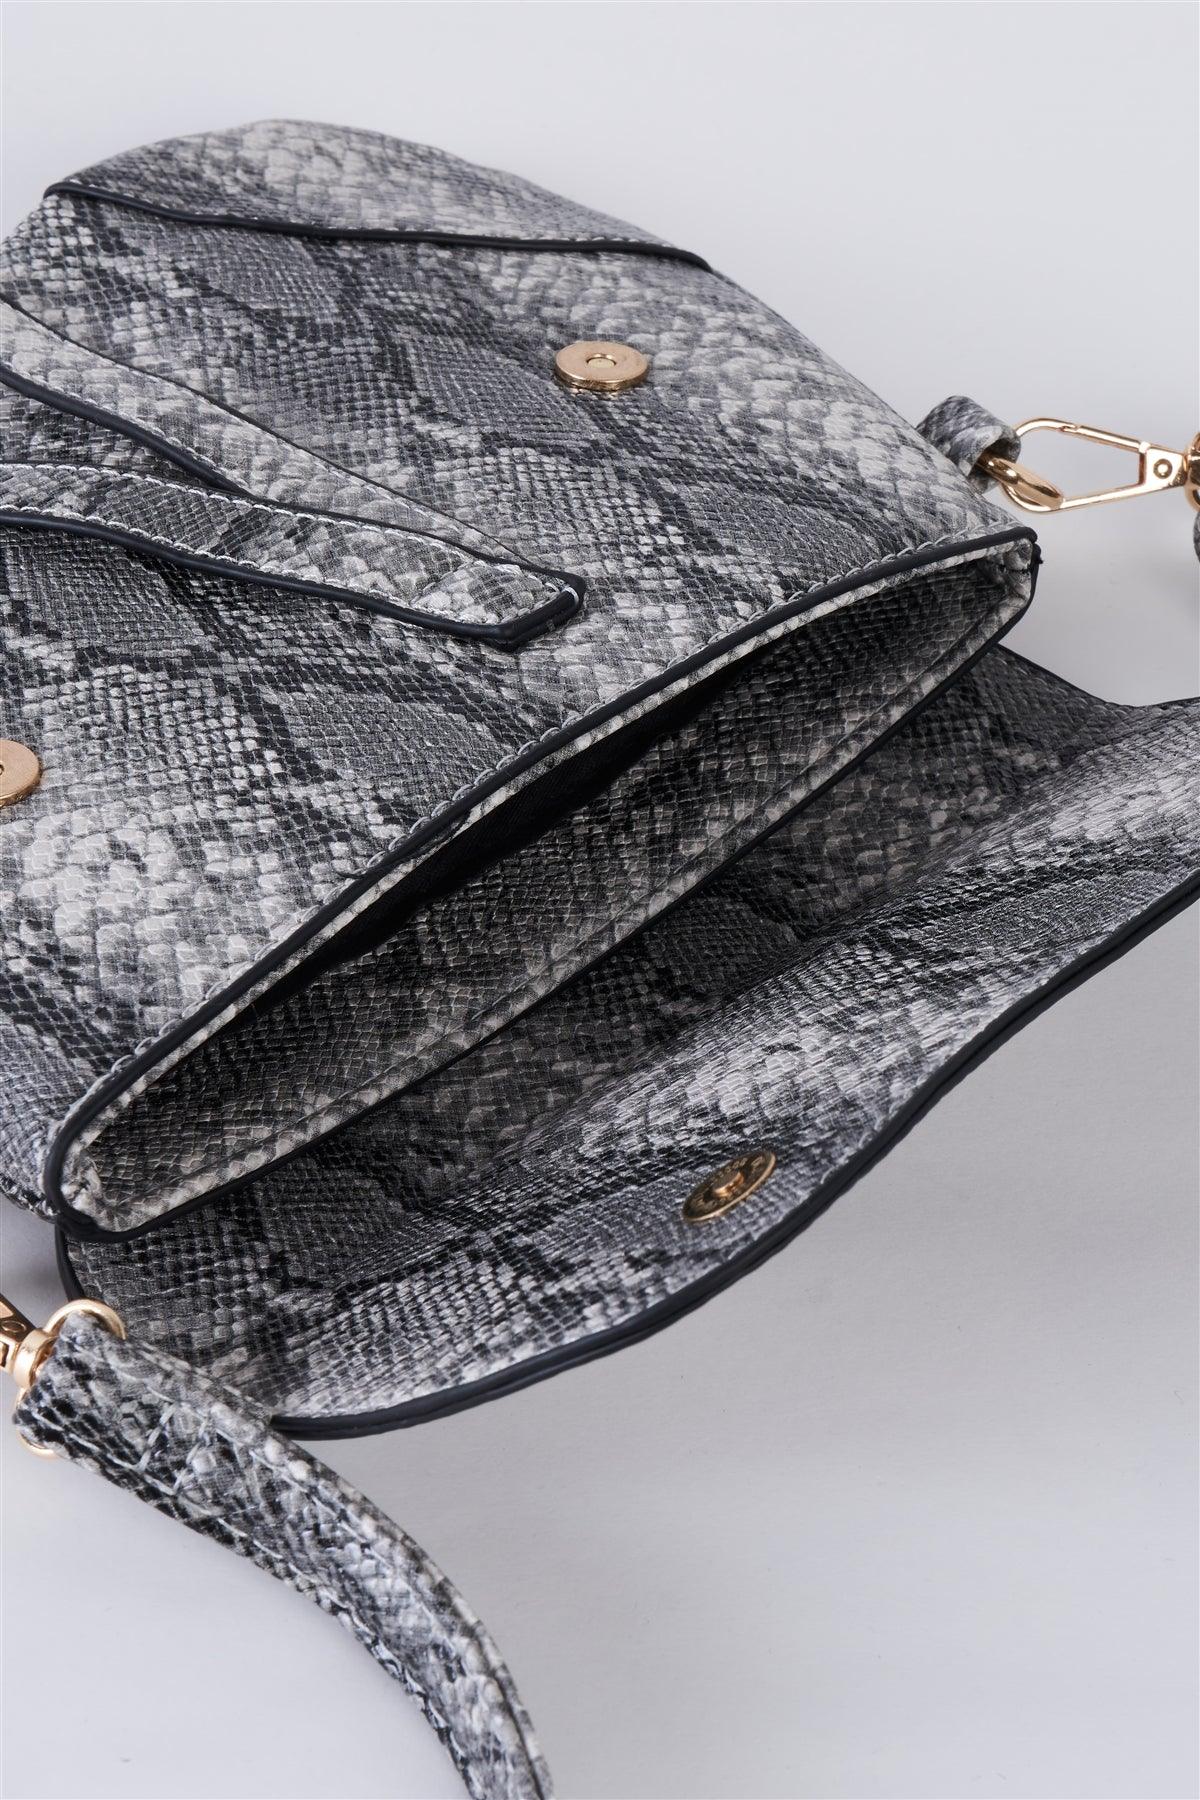 Monochromatic Snake Print Retro Crossbody Handbag /1 Bag